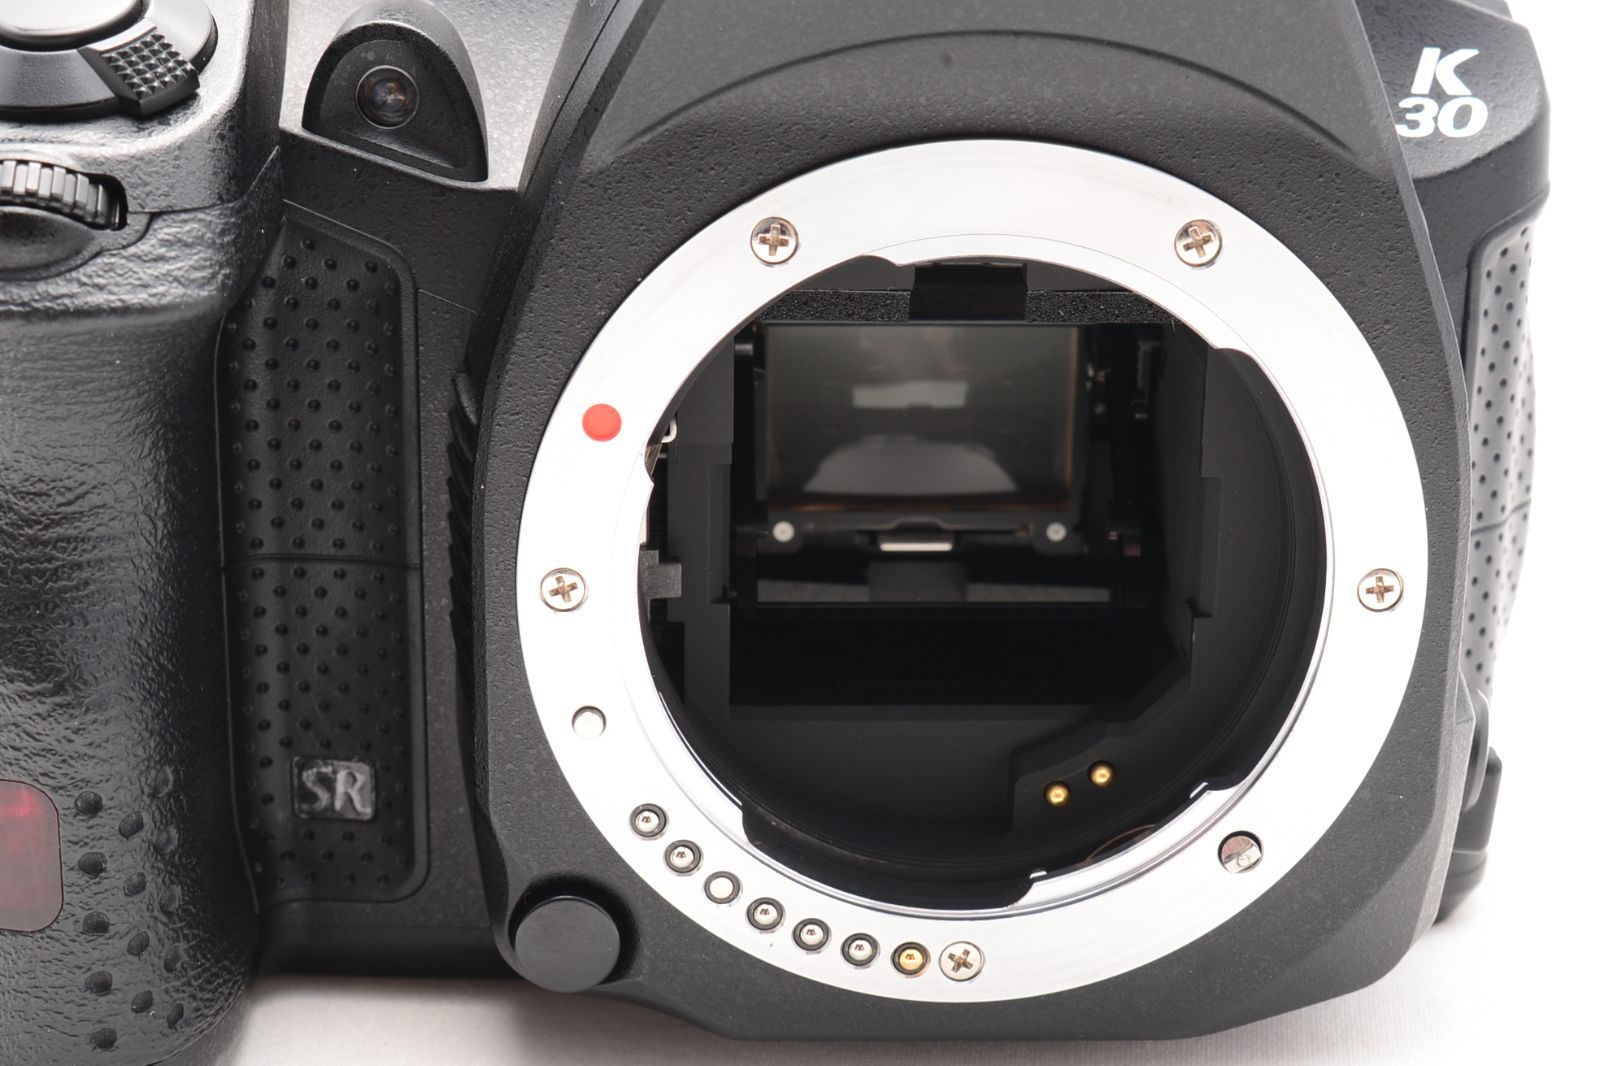 PENTAX デジタル一眼レフカメラ K-30 ボディ ブラック K-30BODY BK 15615 グッチーカメラ メルカリ